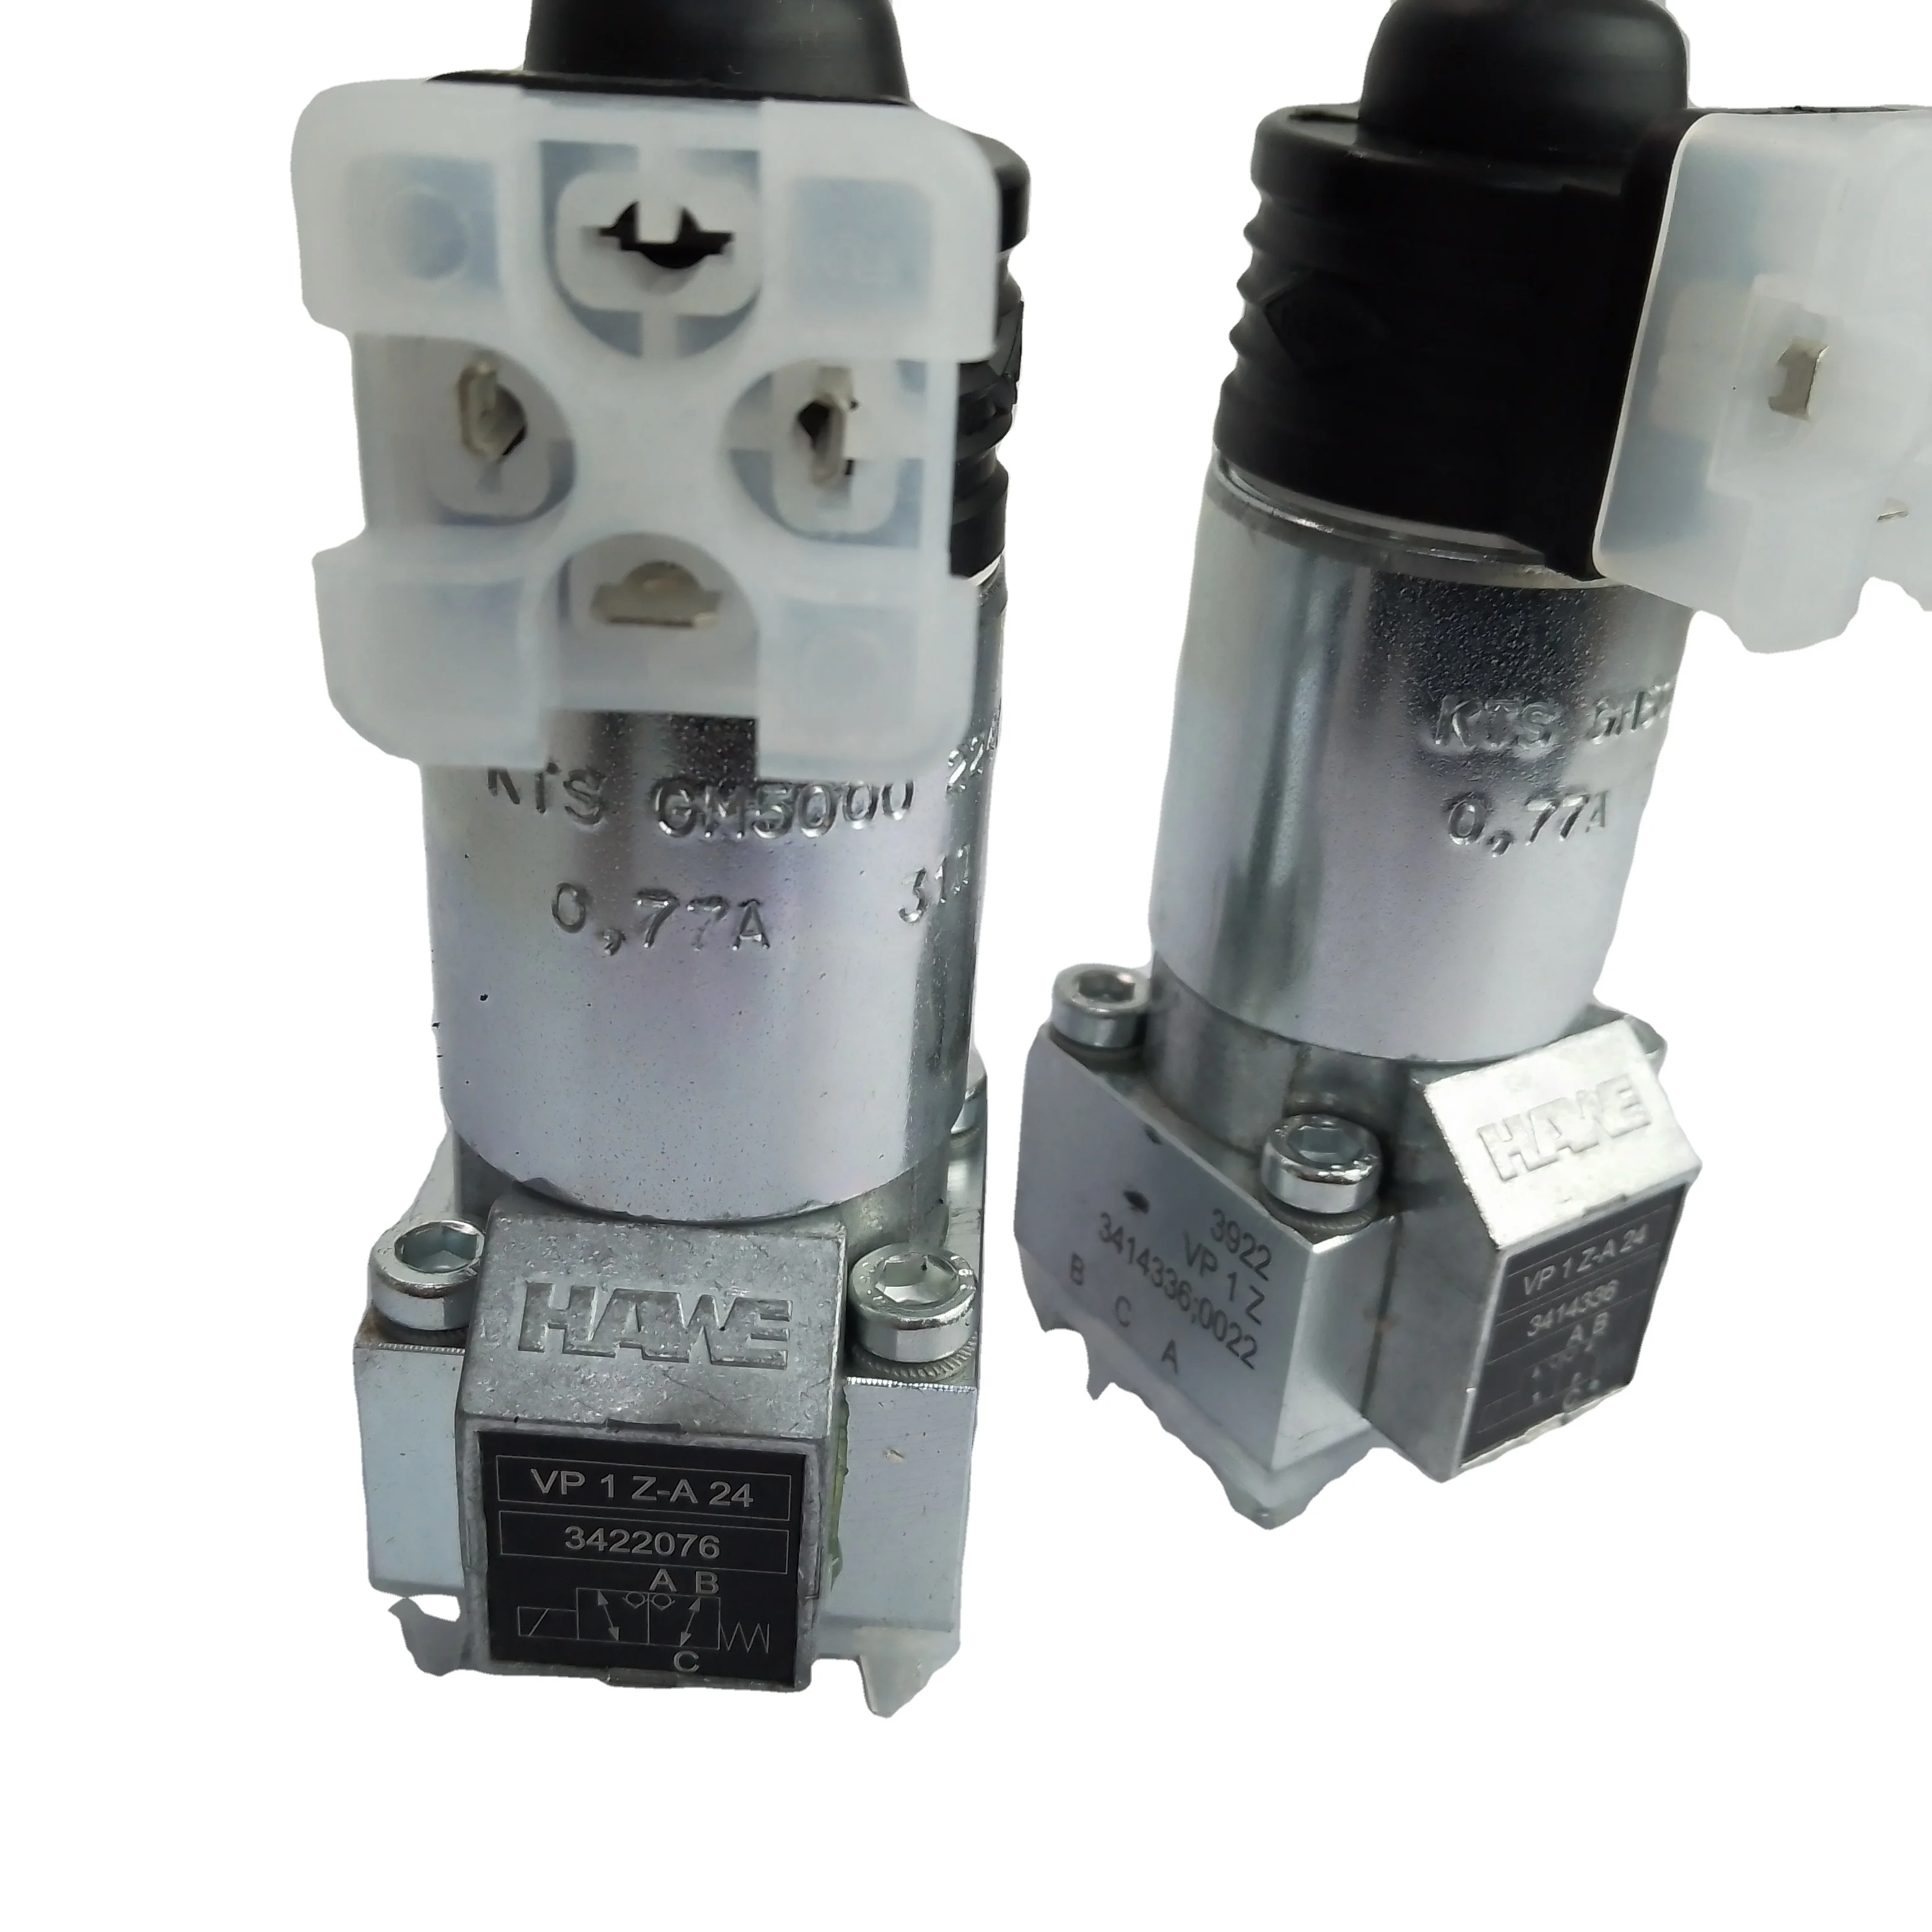 

HAWE Directional solenoid valve VP1Z-A24